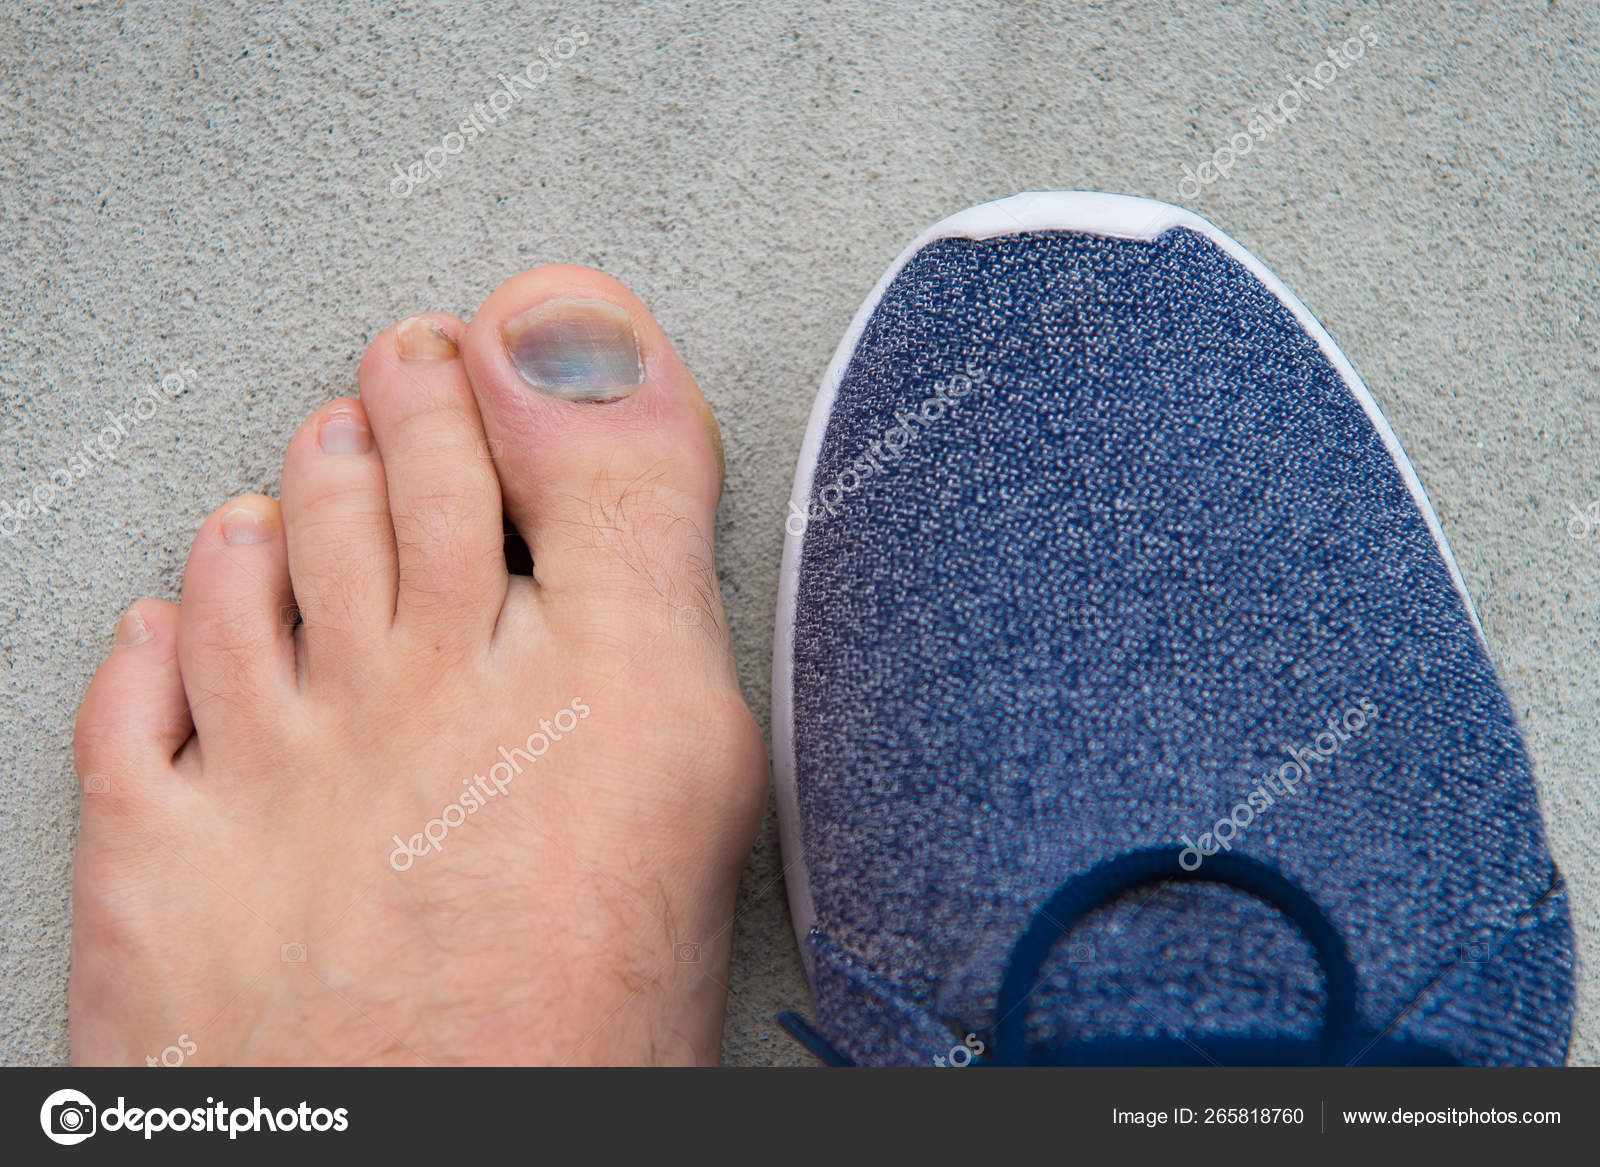 gomba nail foot medicine)